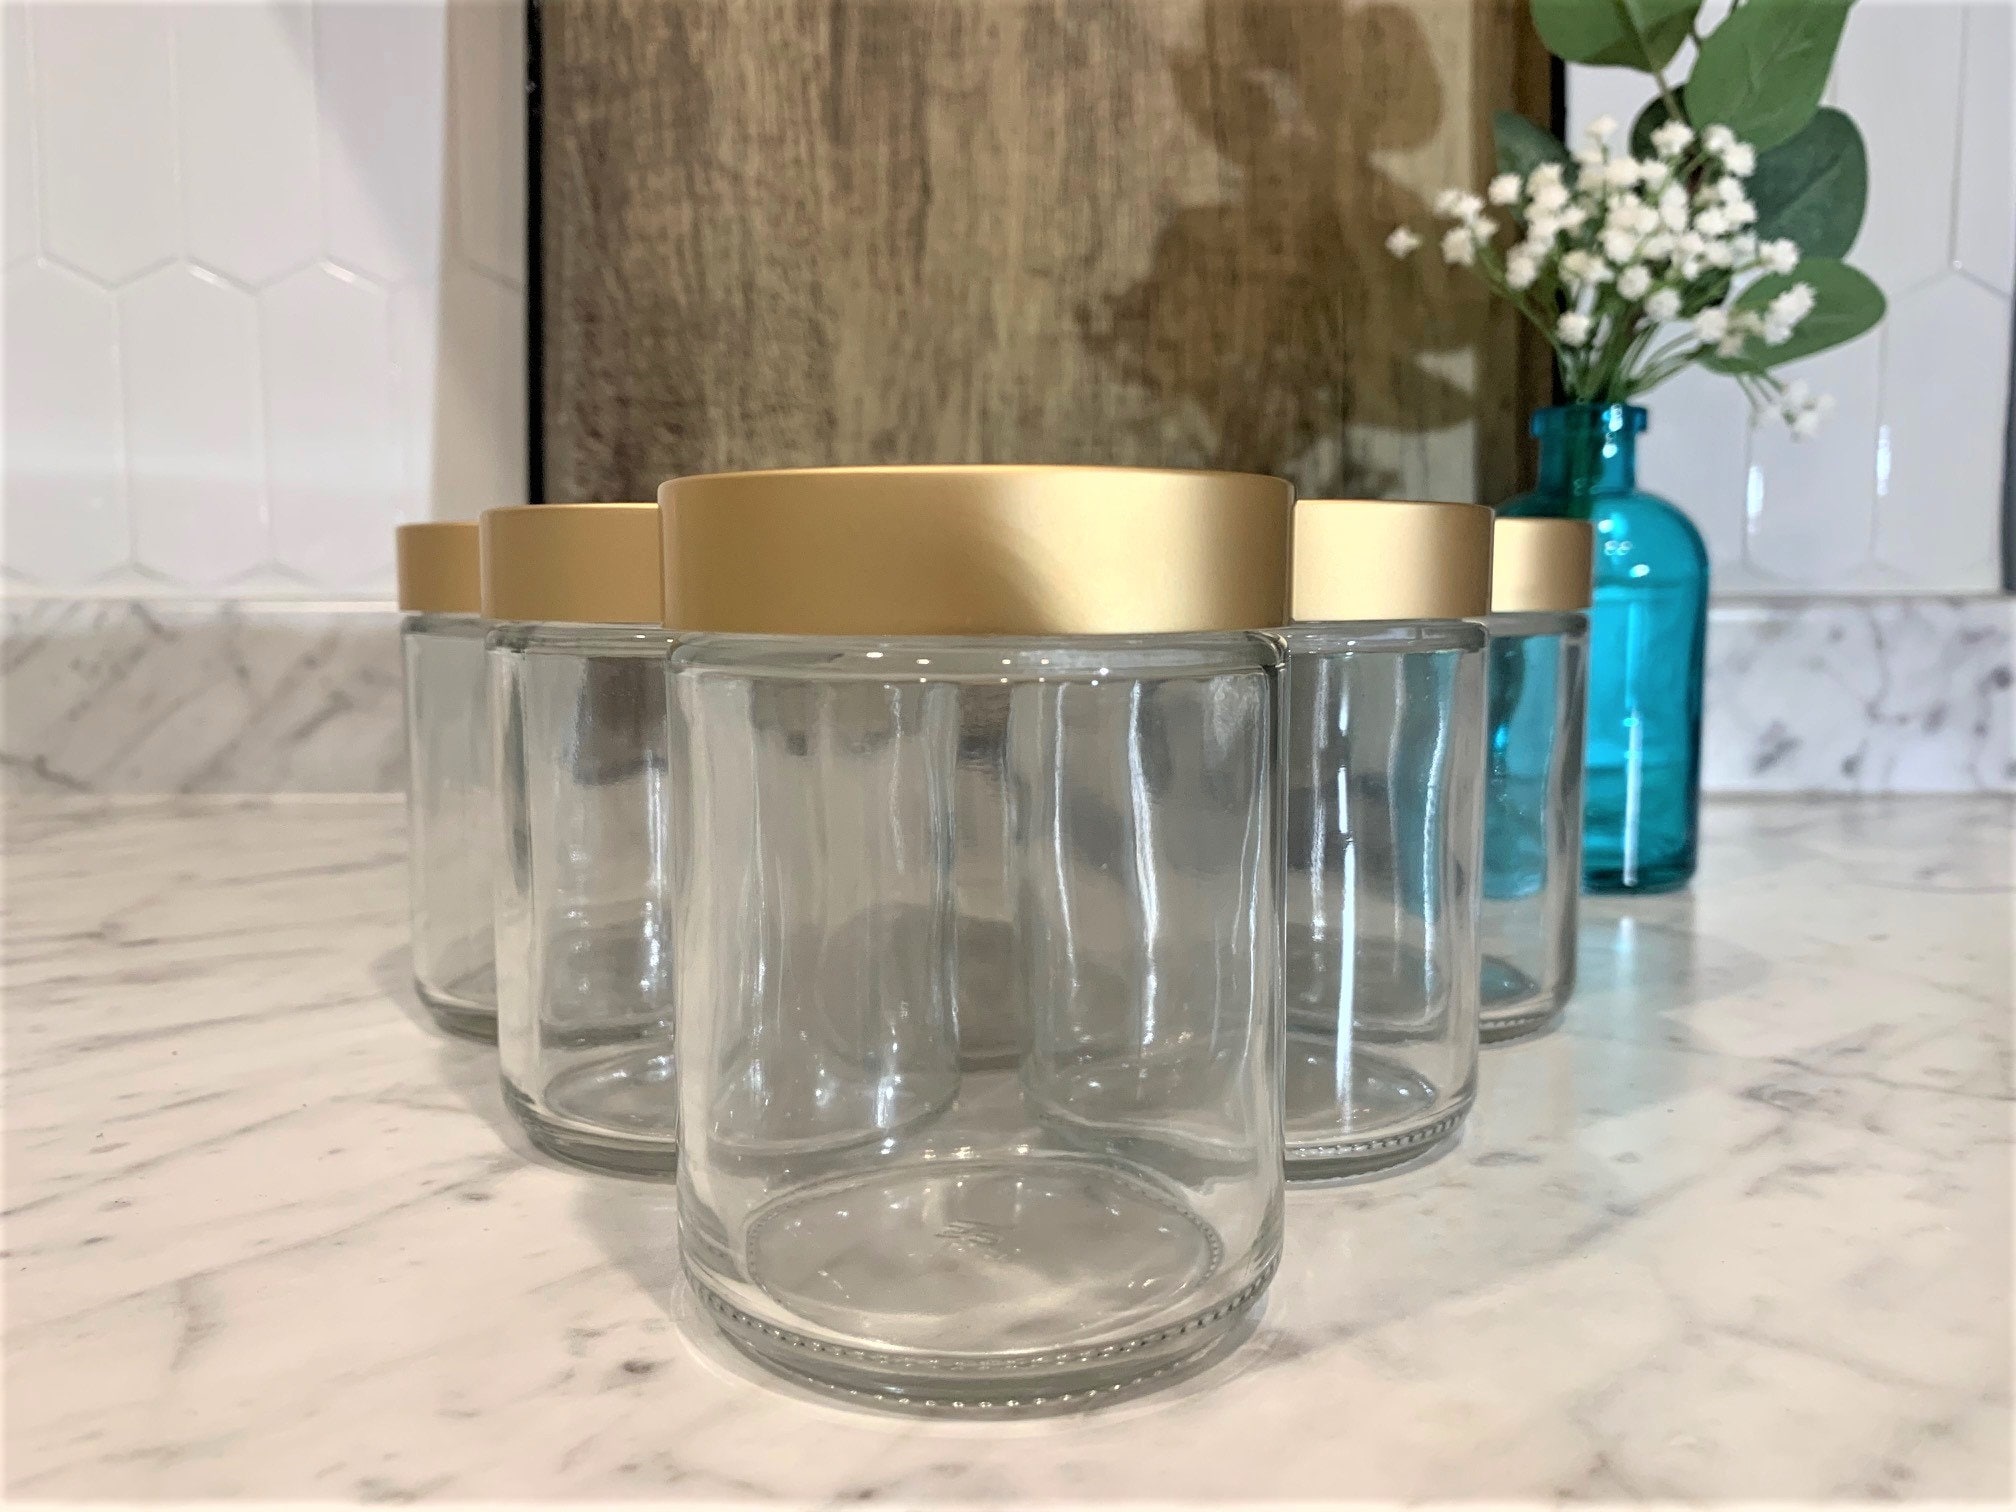 Uline Clear Straight-Sided Glass Jars - 16 oz, White Metal Lid